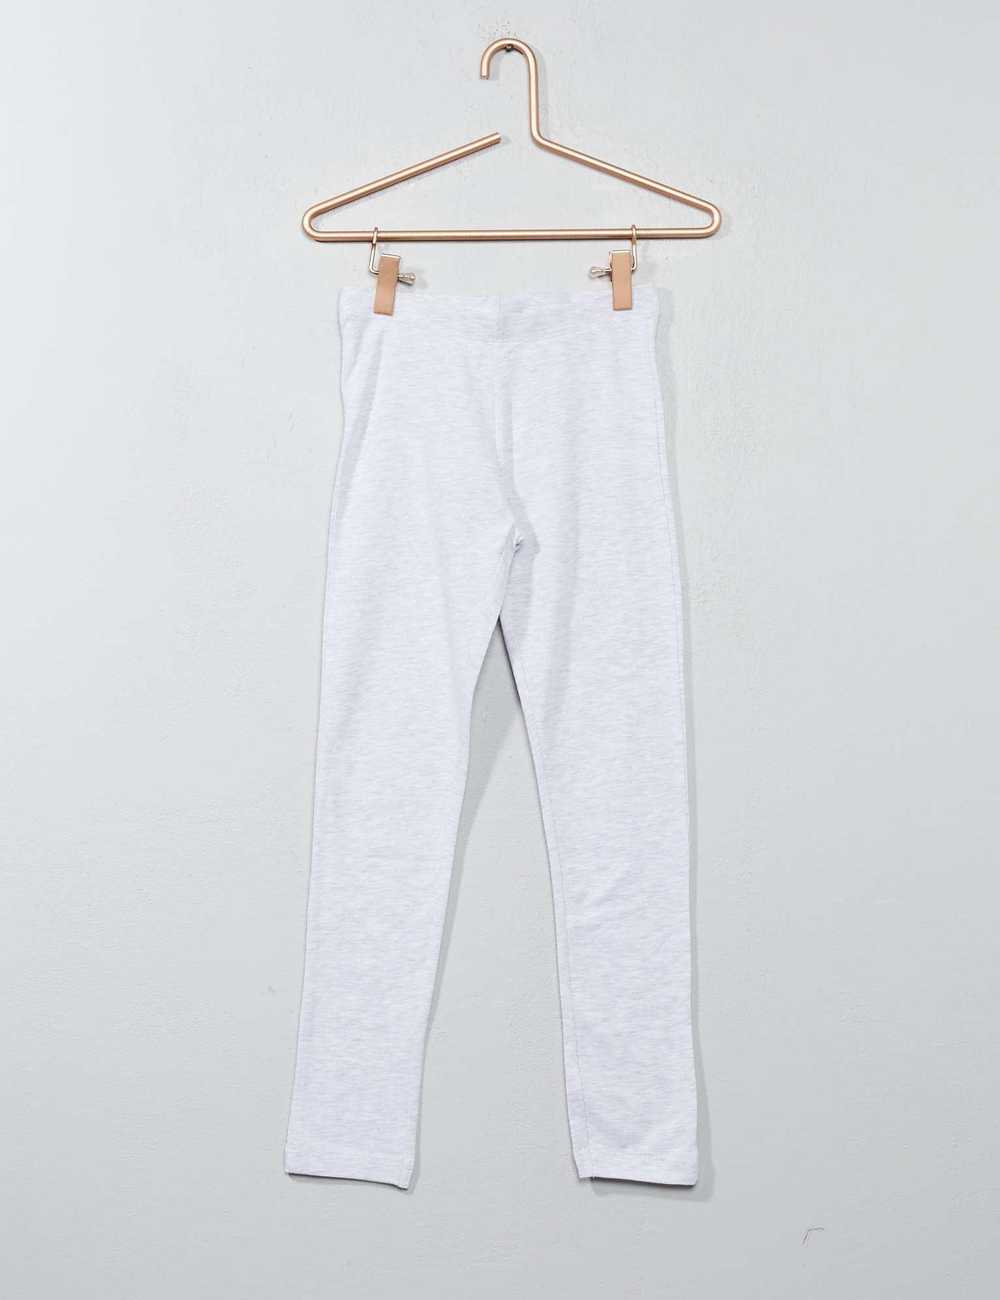 Buy Long cotton stretch leggings Online in Dubai & the UAE